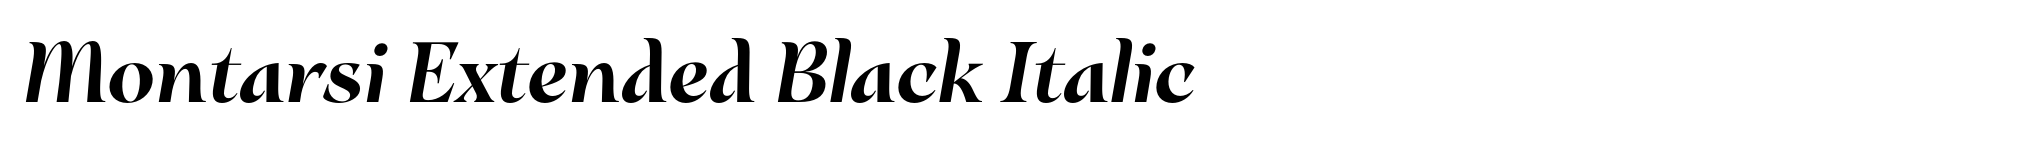 Montarsi Extended Black Italic image